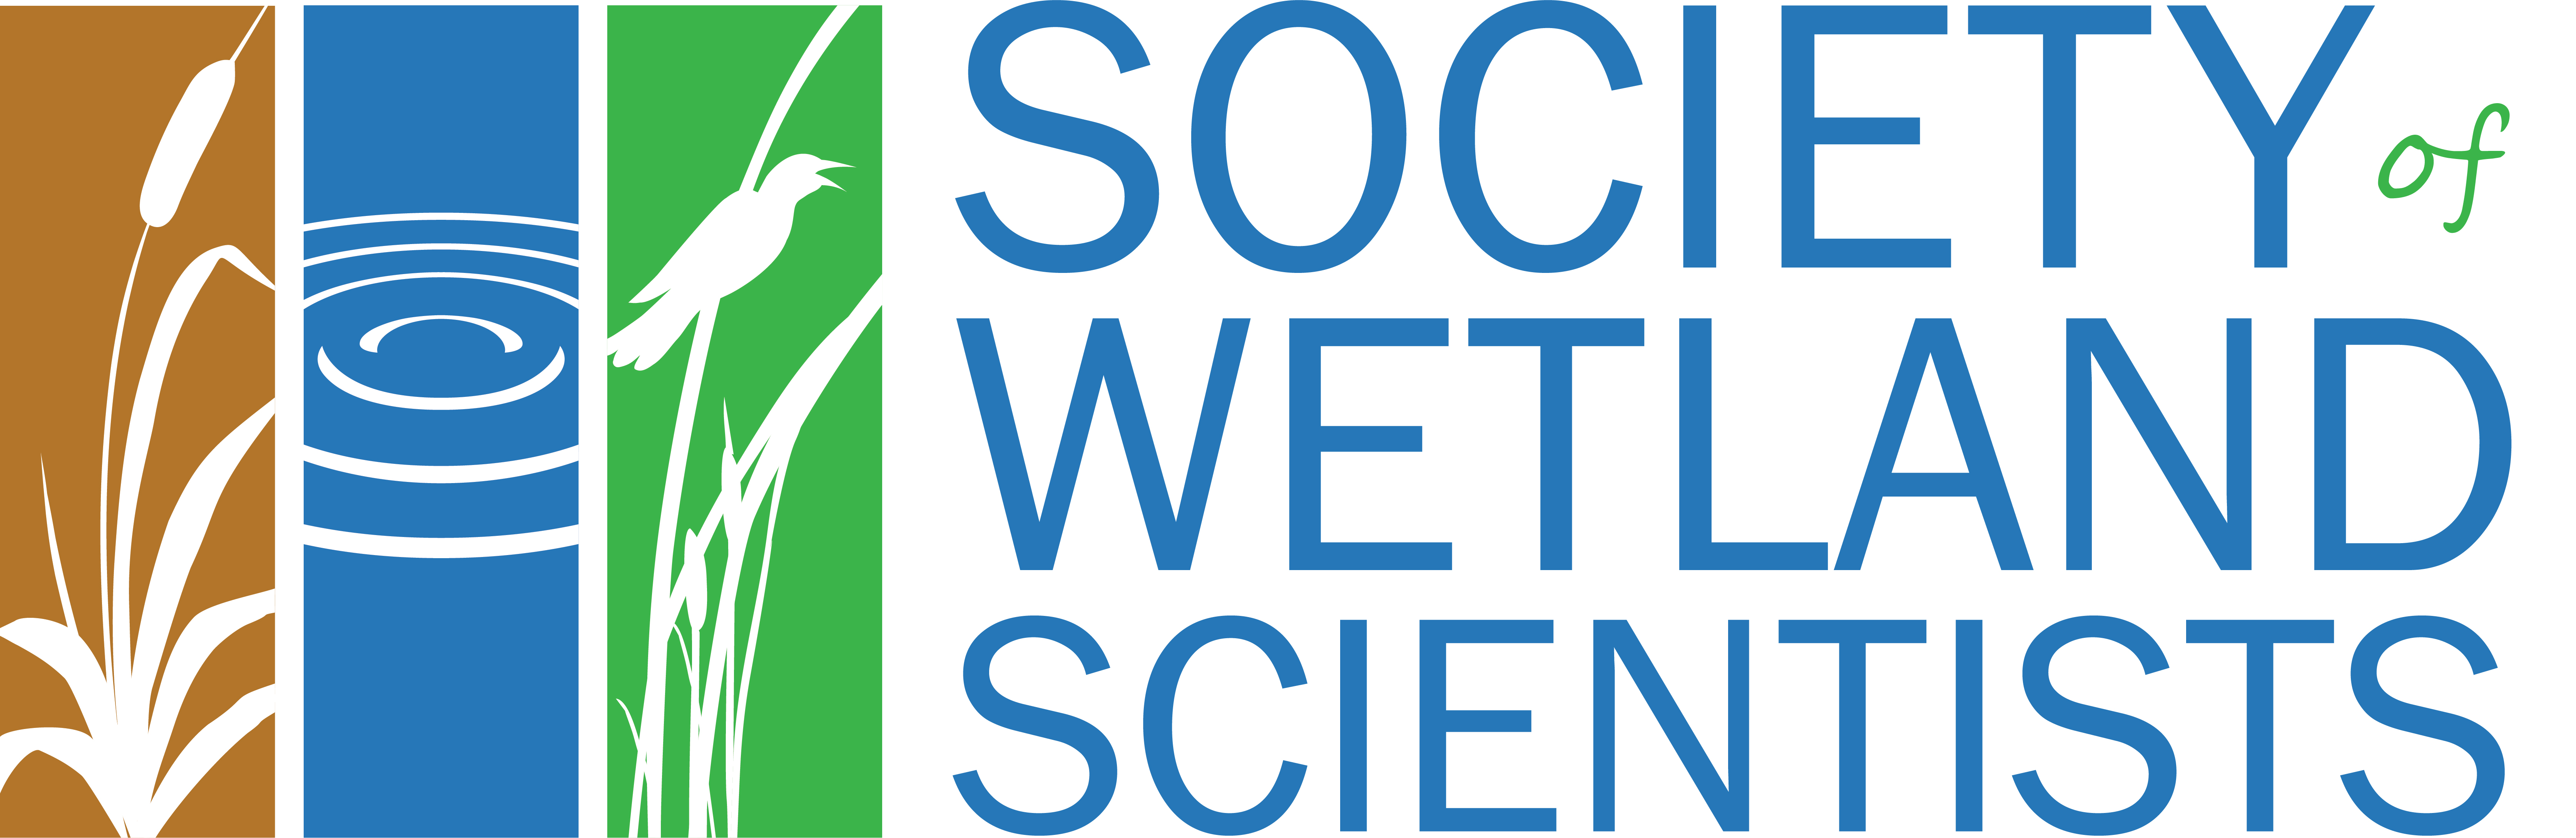 Society of Wetland Scientist